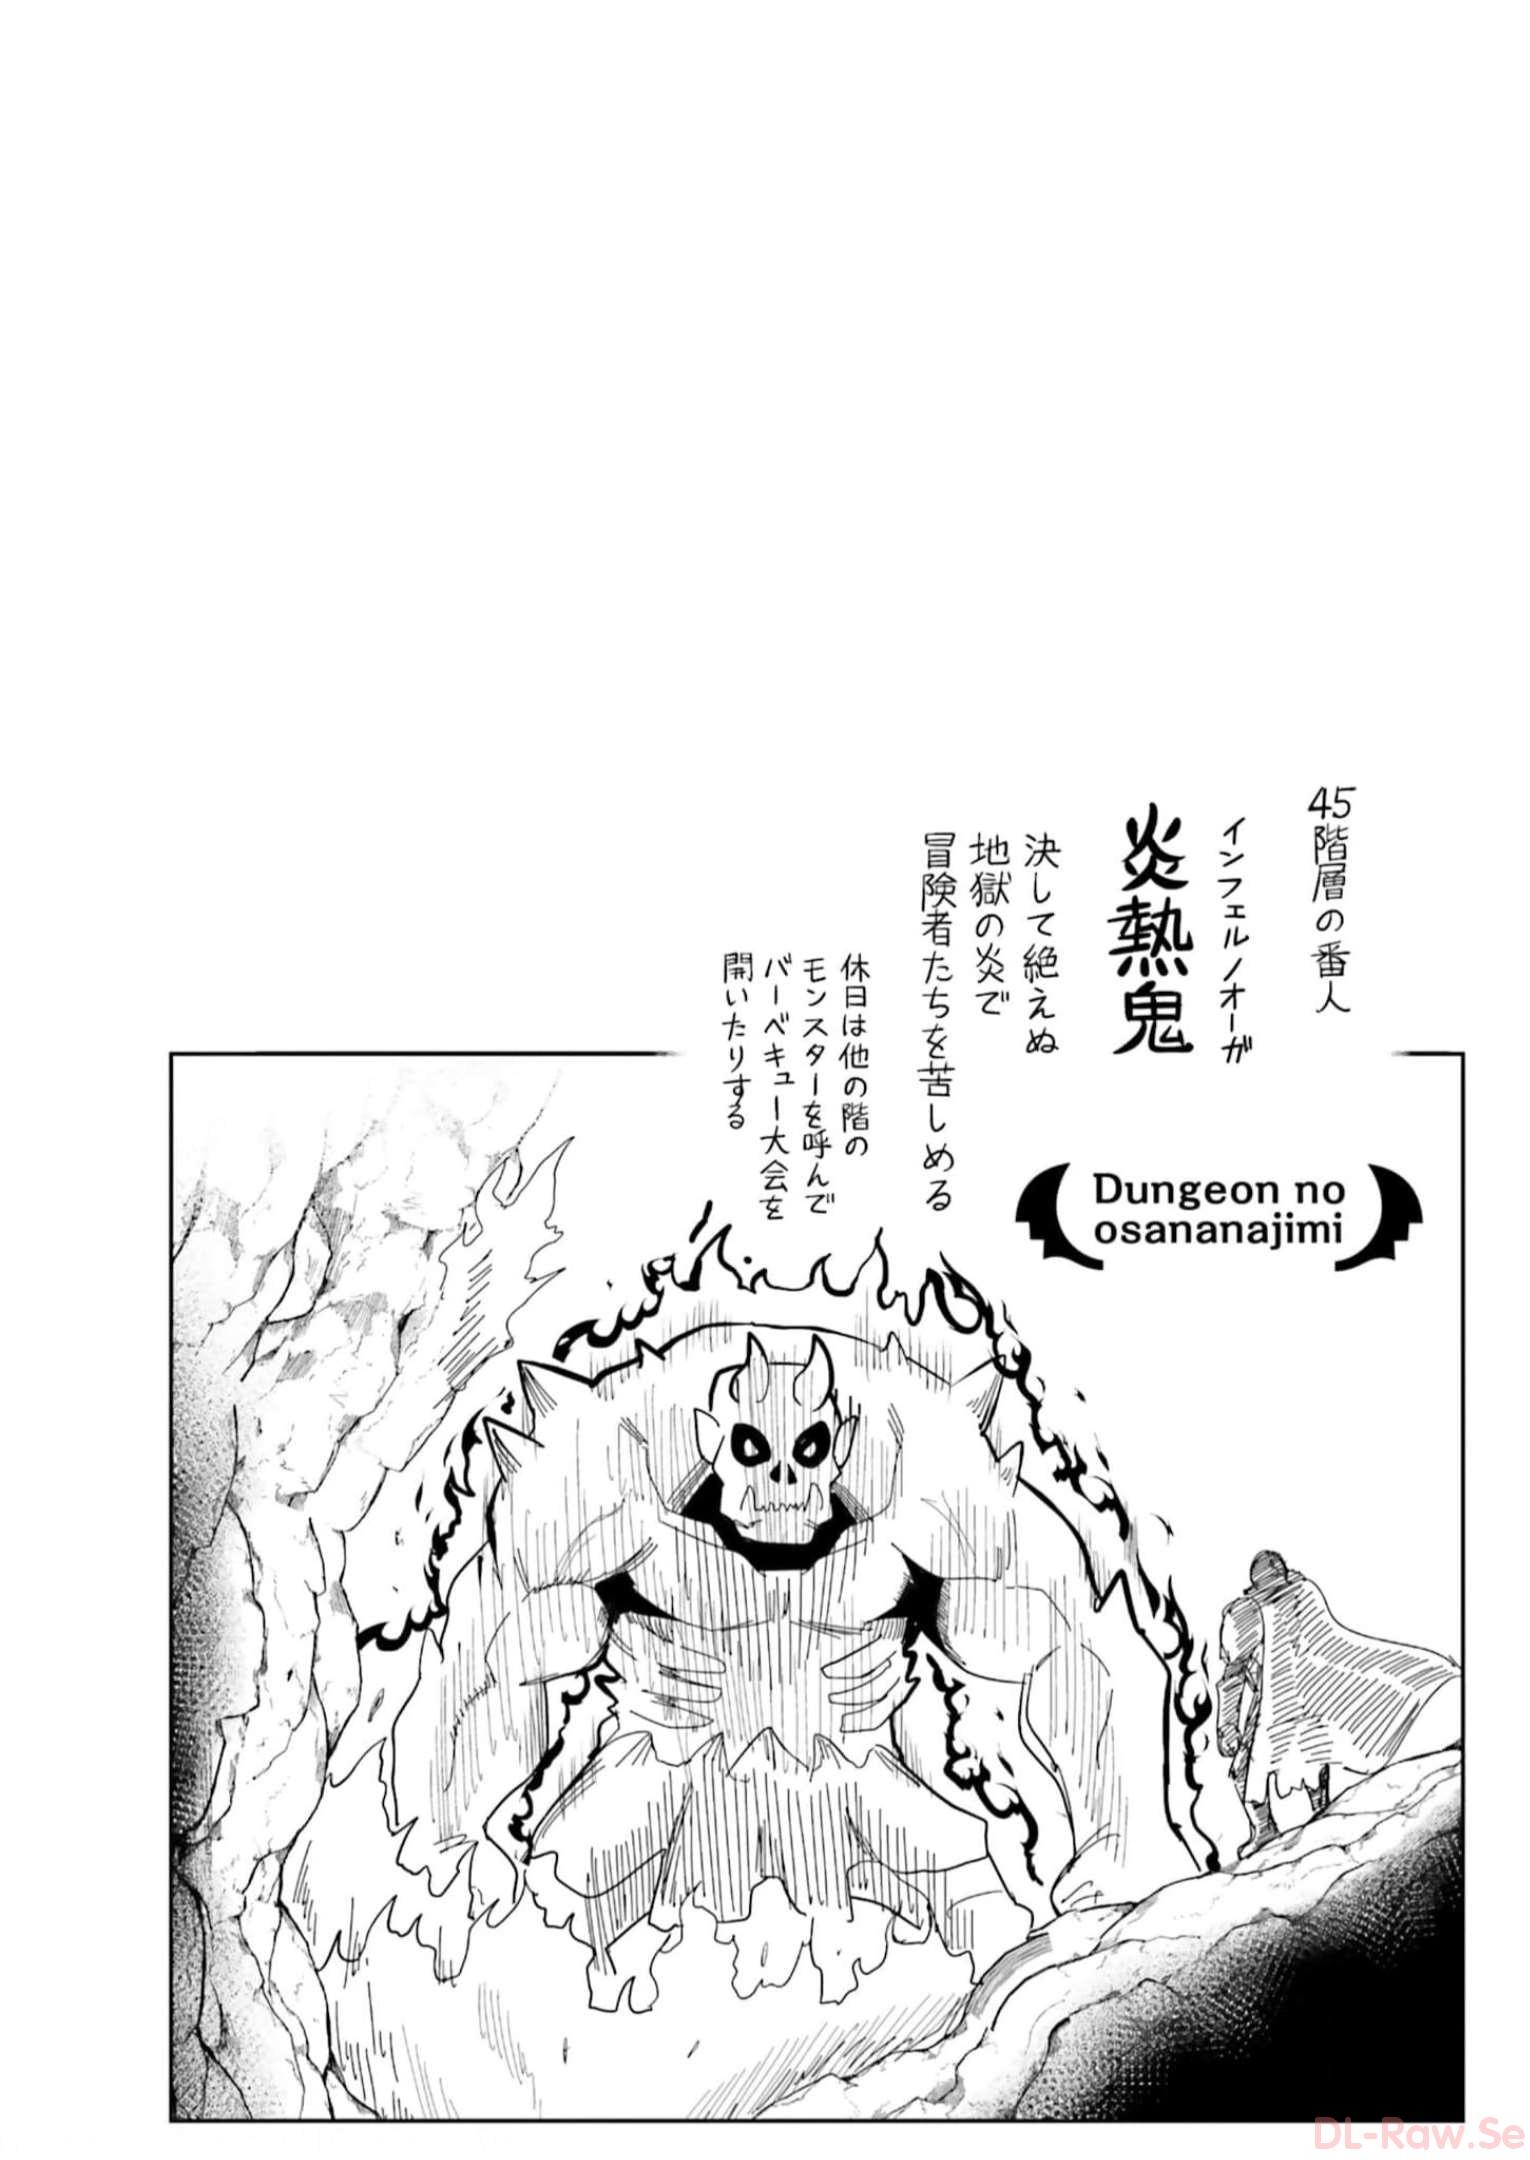 Dungeon no Osananajimi - Chapter 7 - Page 14